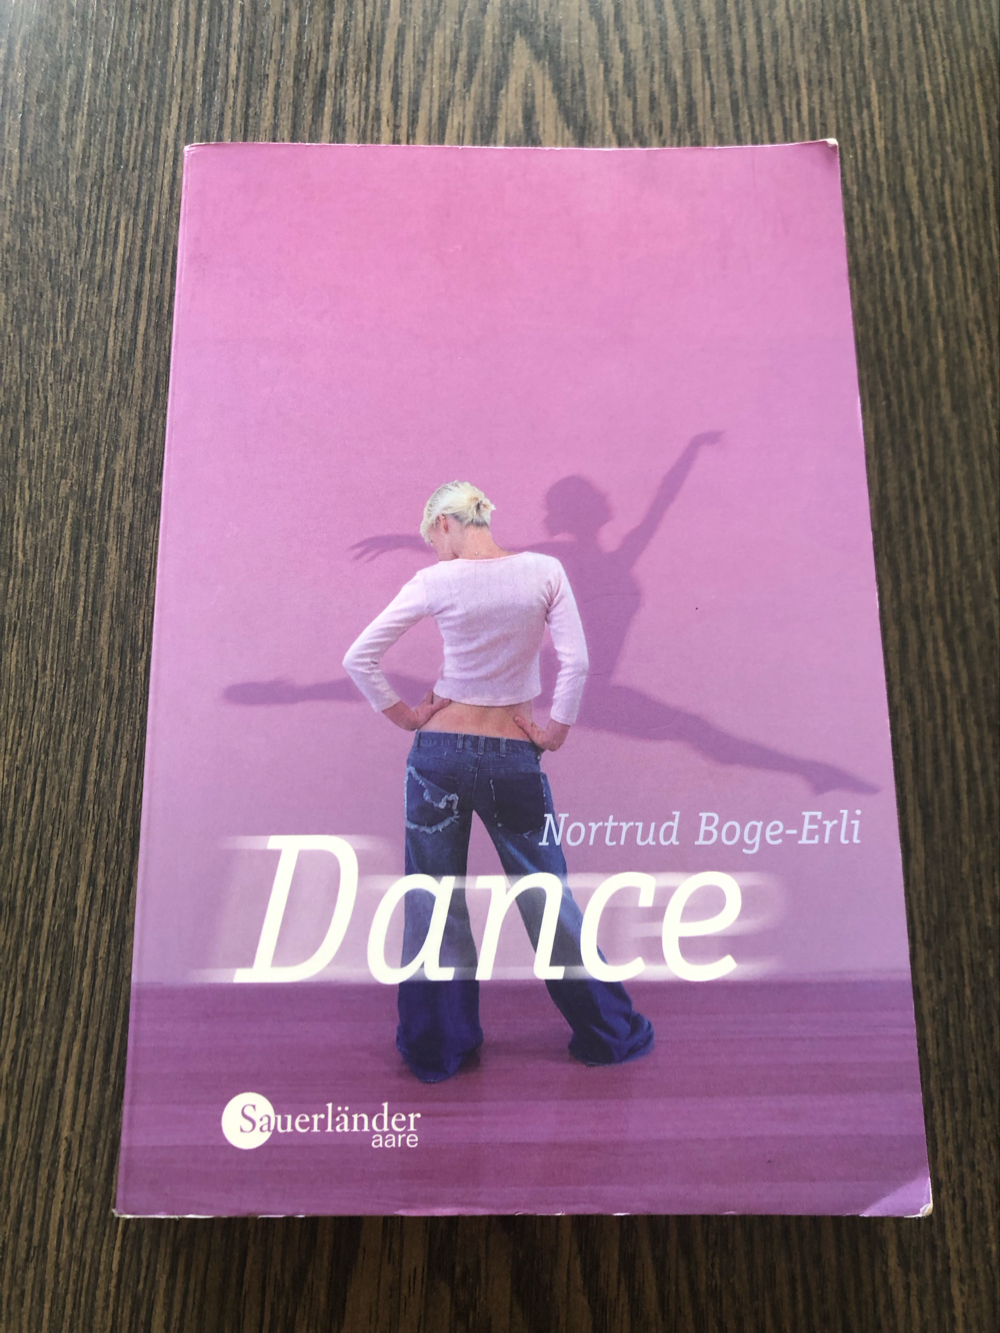 Dance, Nortrud Boge-Erli